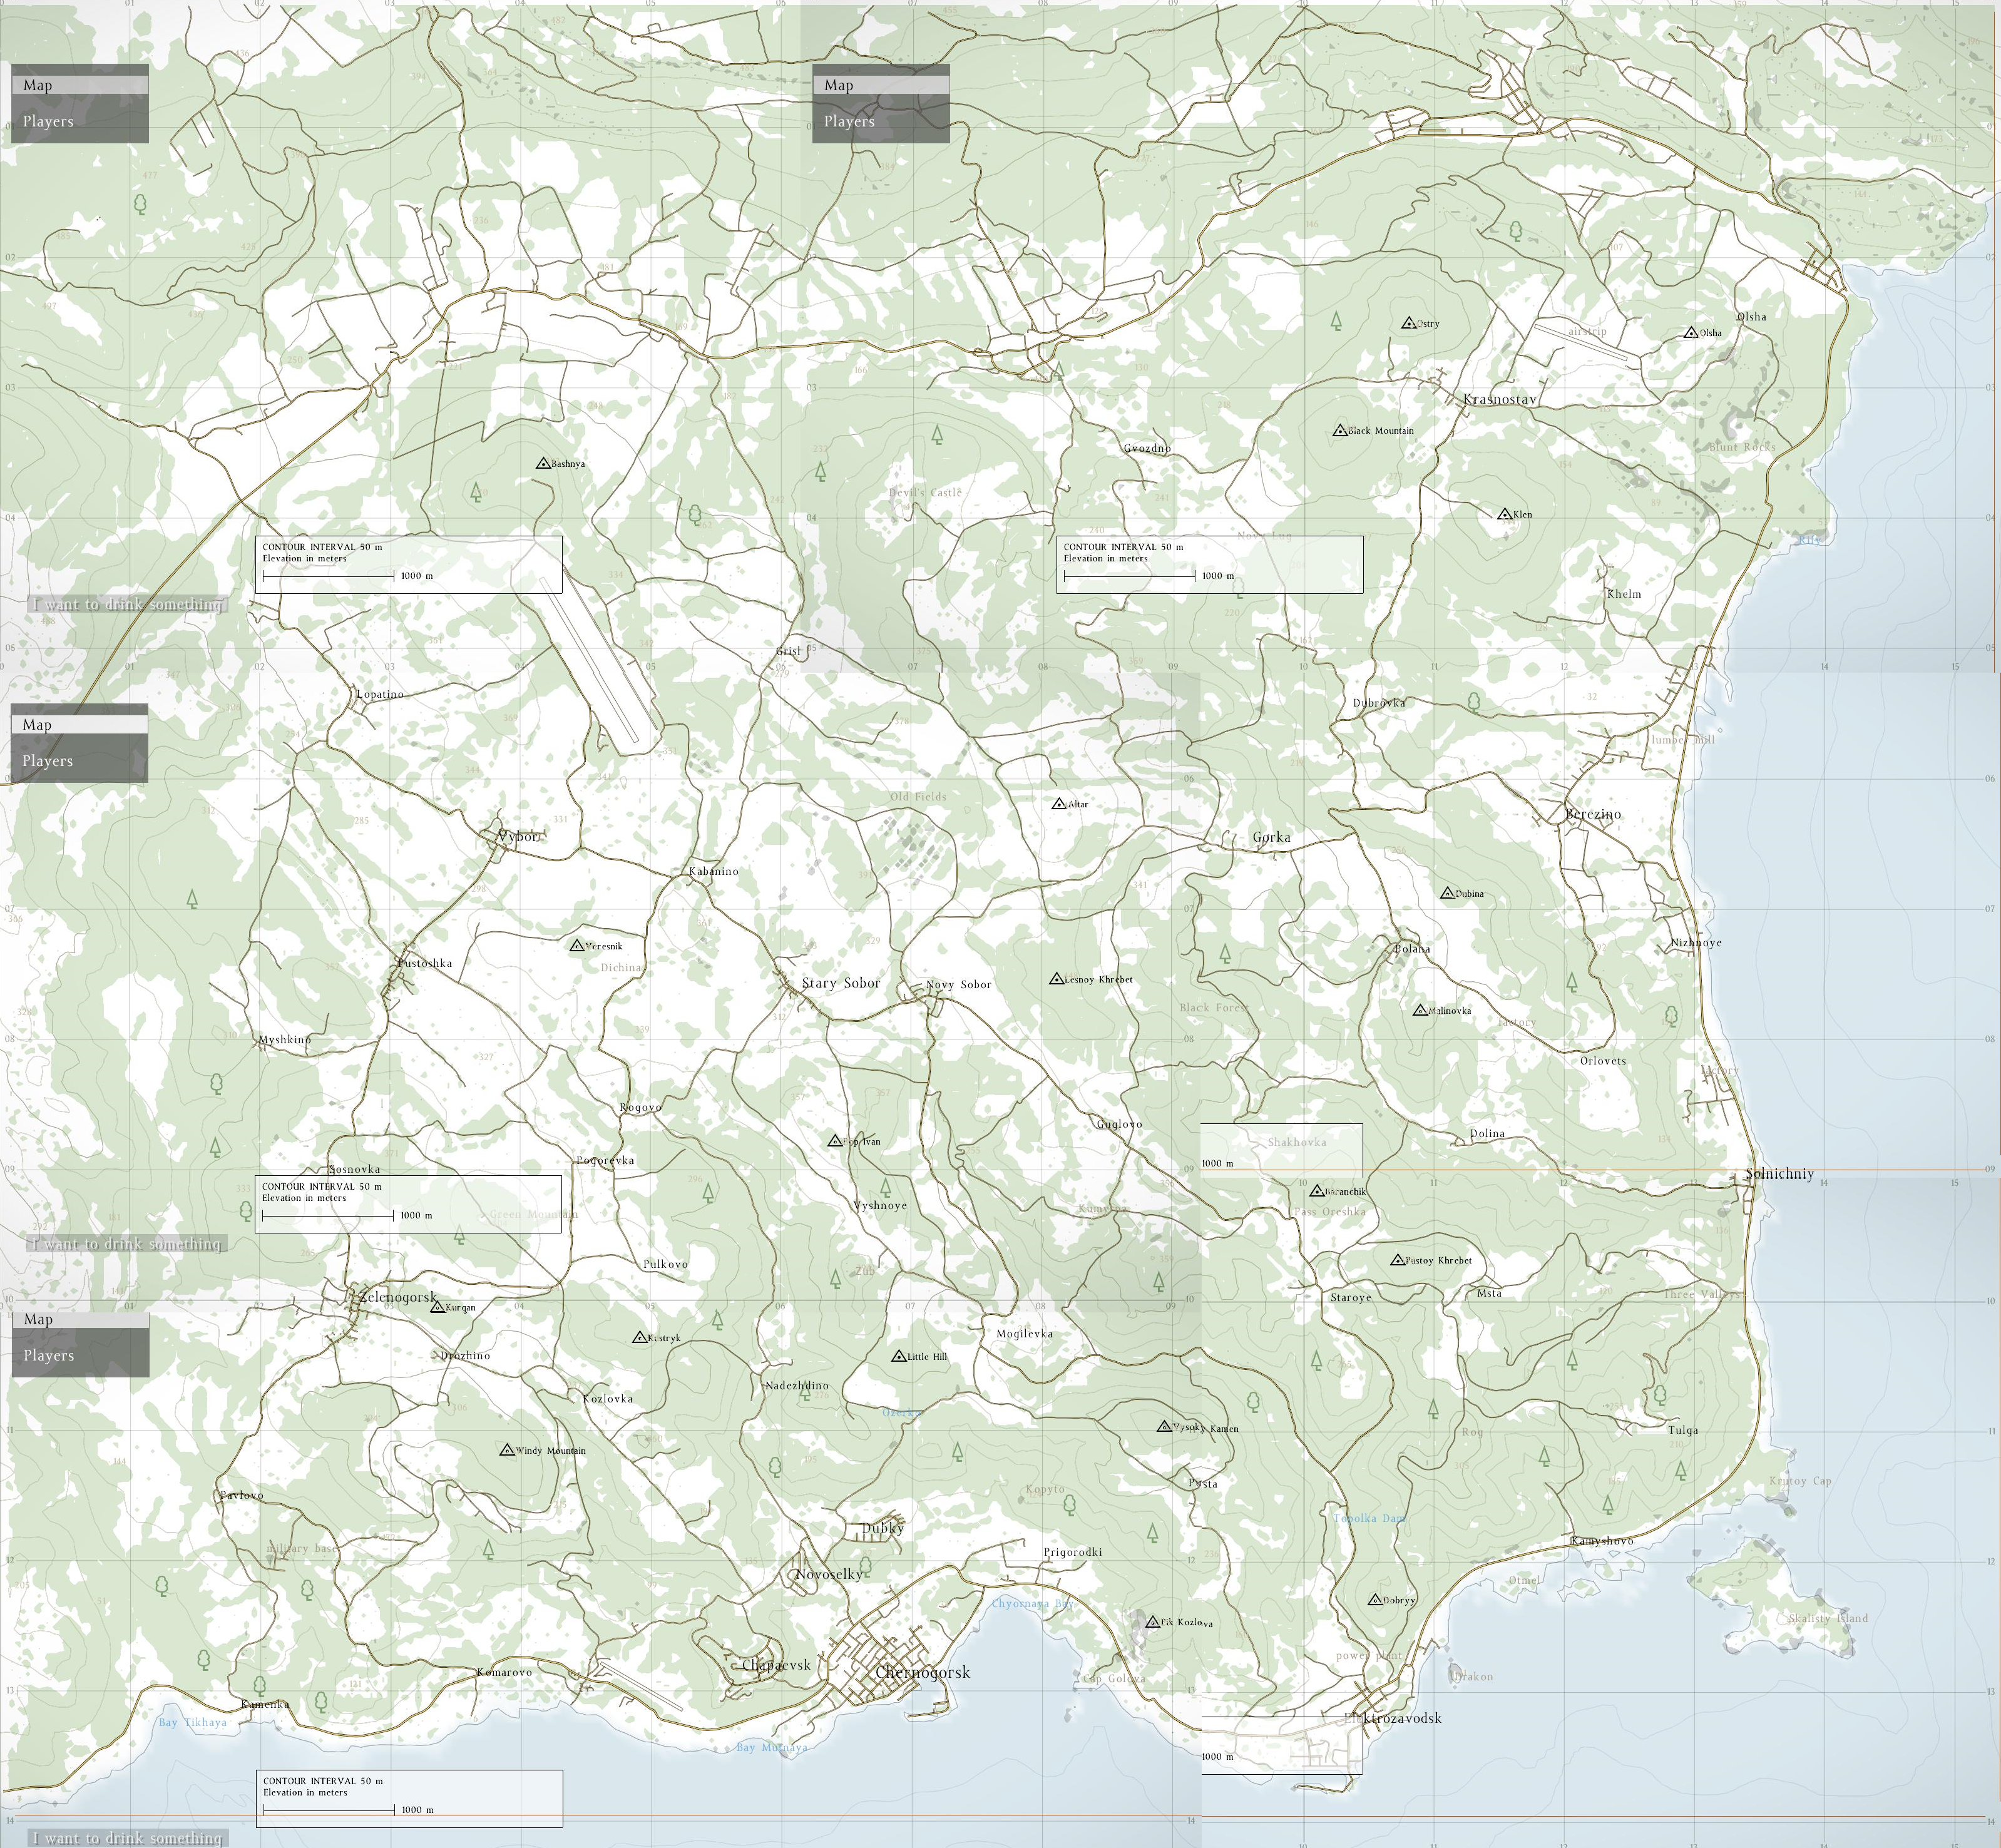 DayZ Standalone Map by MarksmanHun on DeviantArt